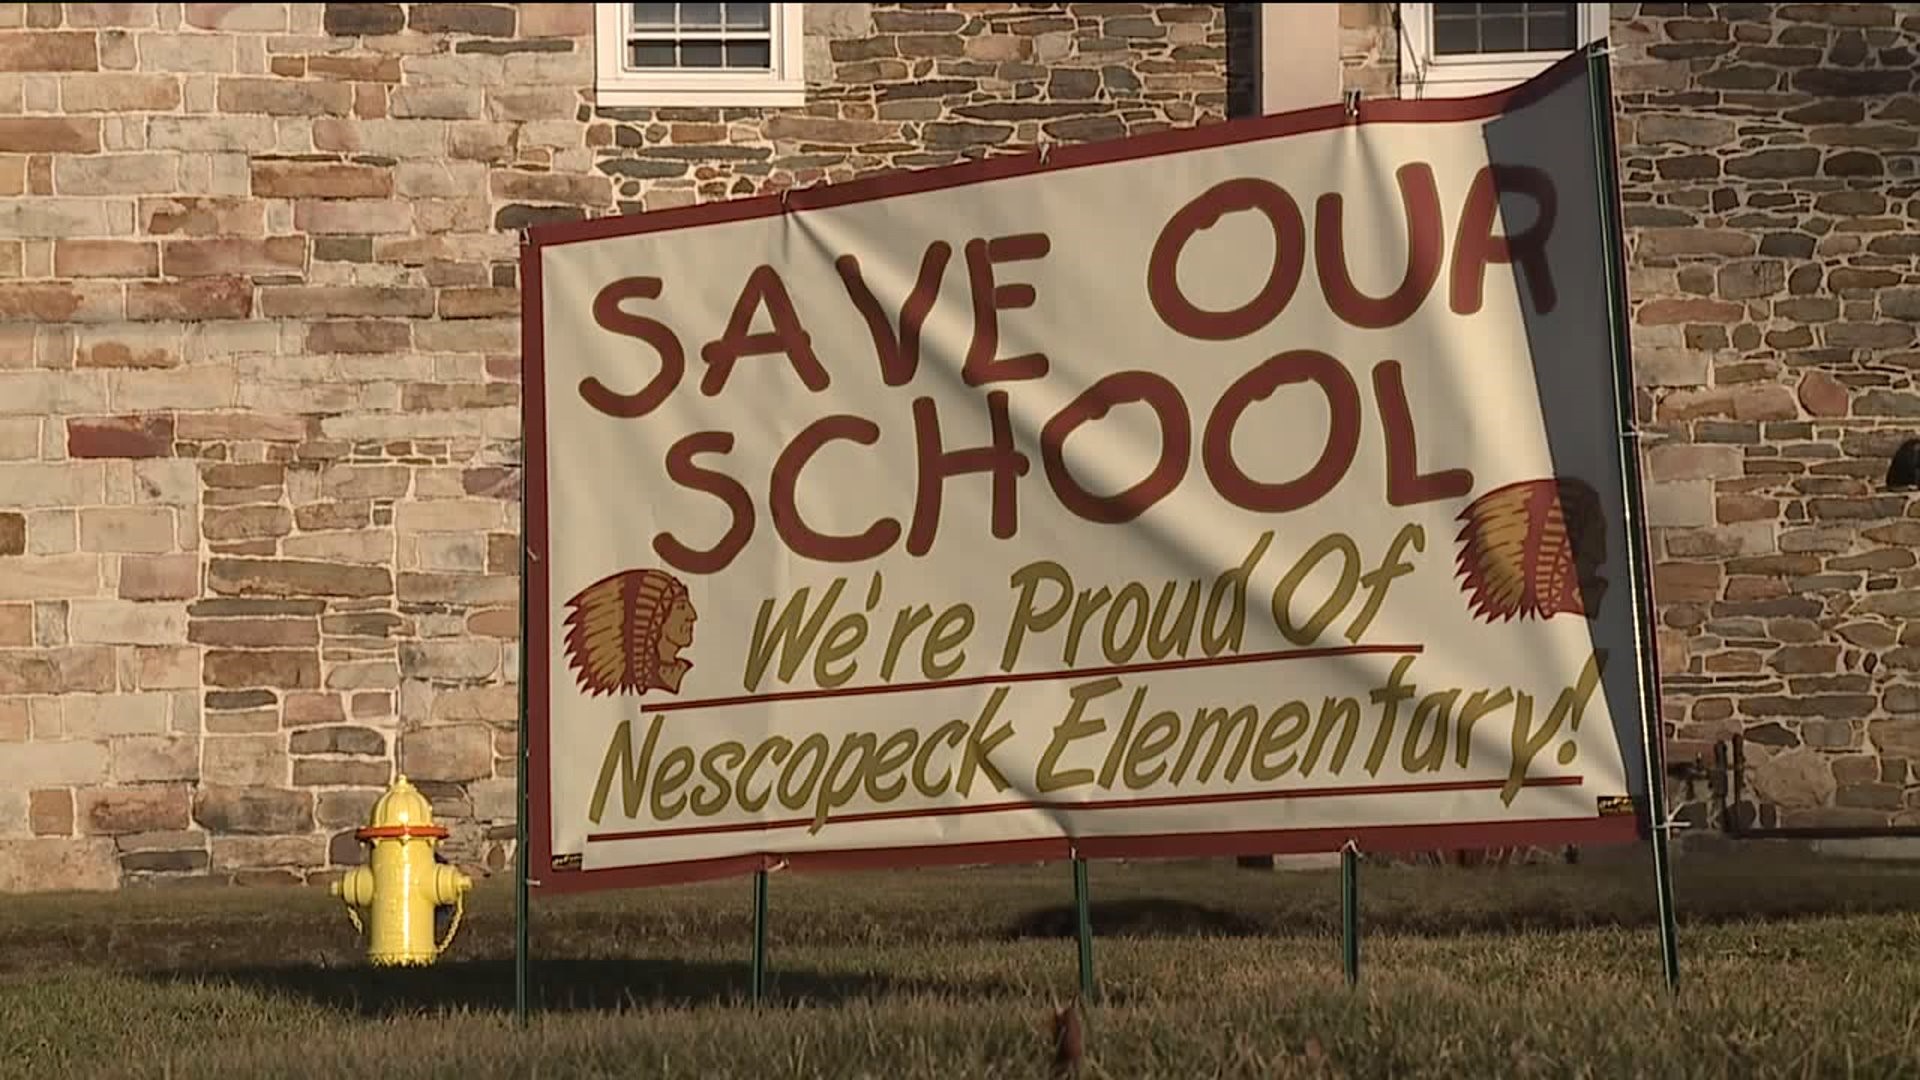 Nescopeck Elementary Saved